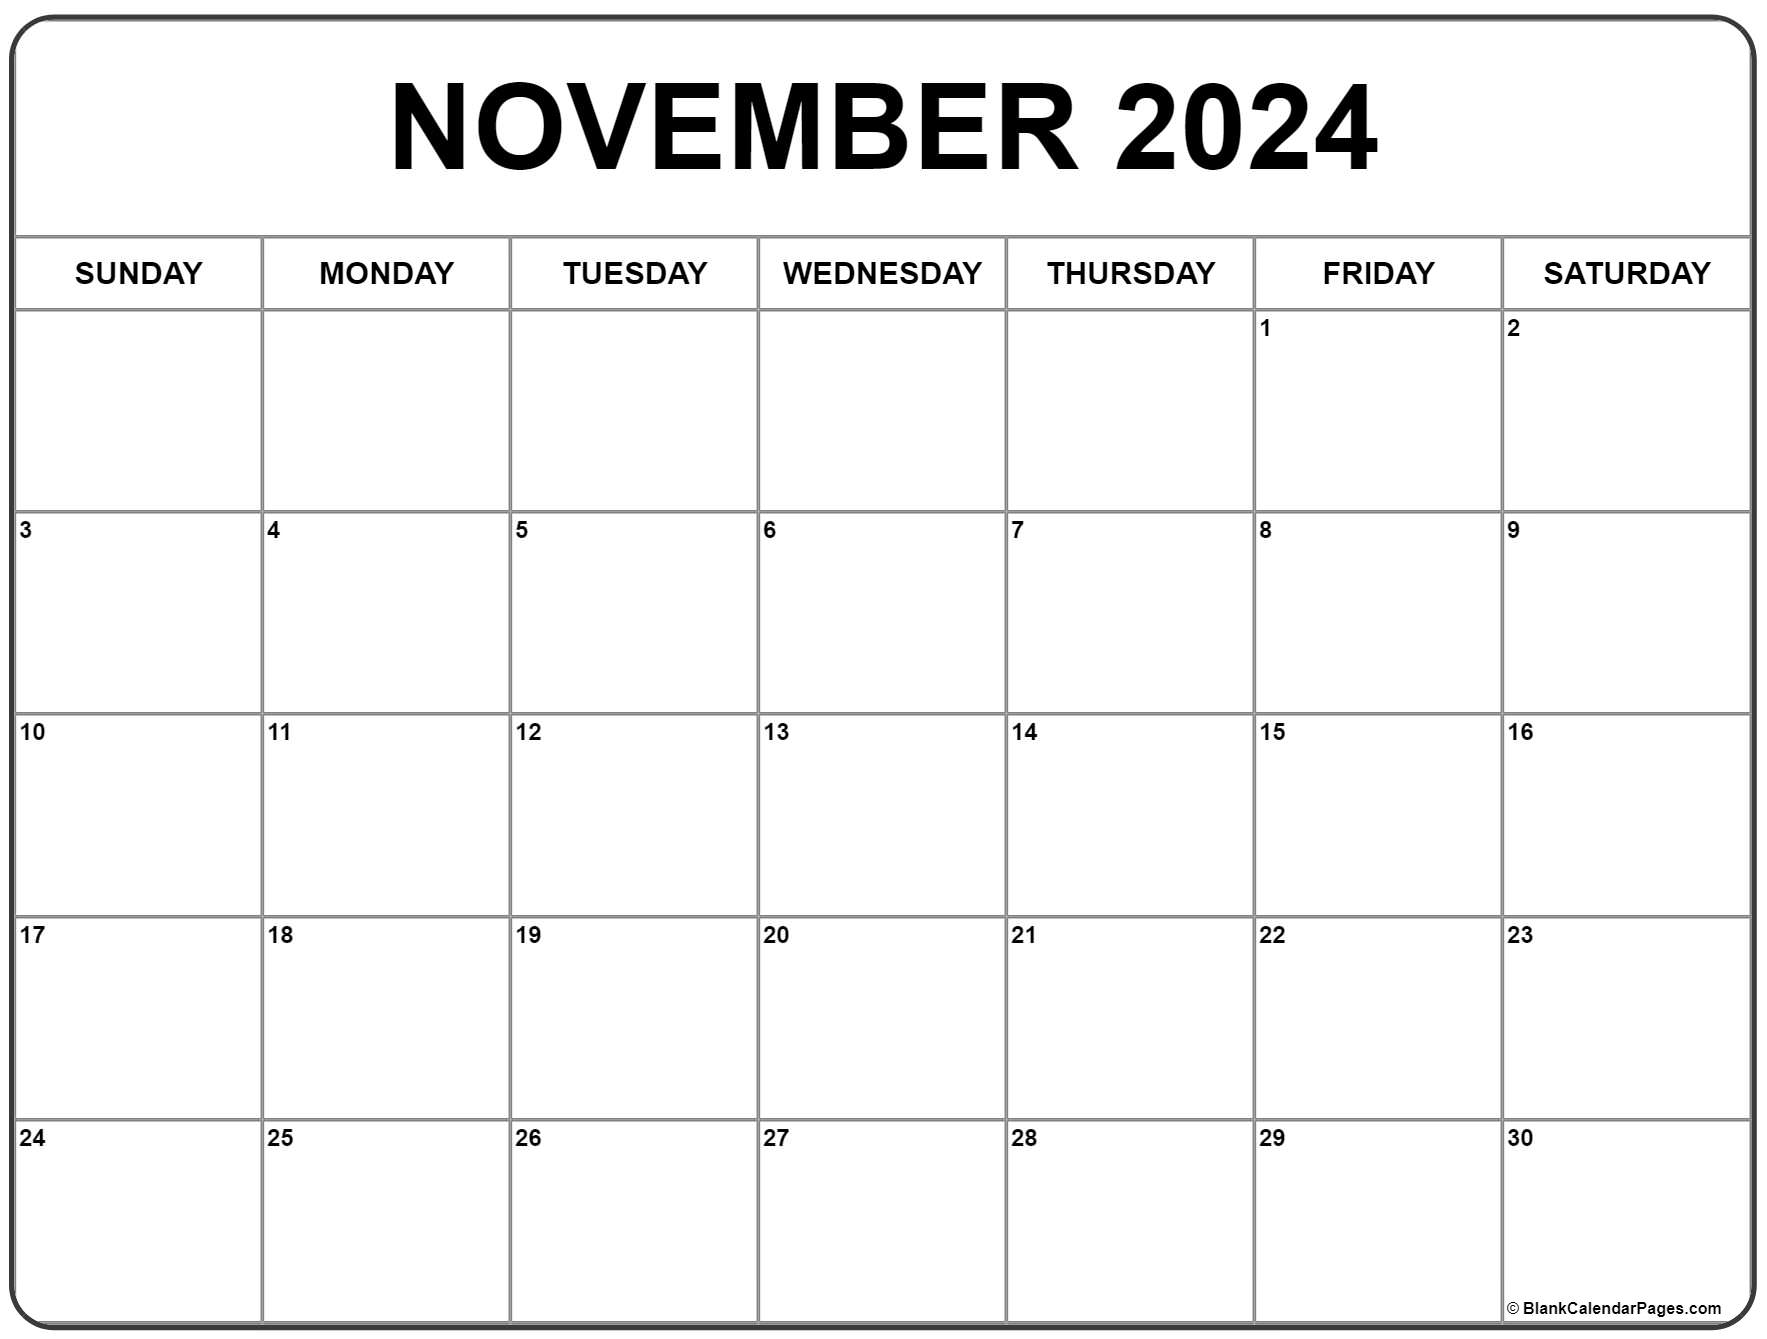 November 2022 Calendar Holidays November 2022 Calendar | Free Printable Calendar Templates